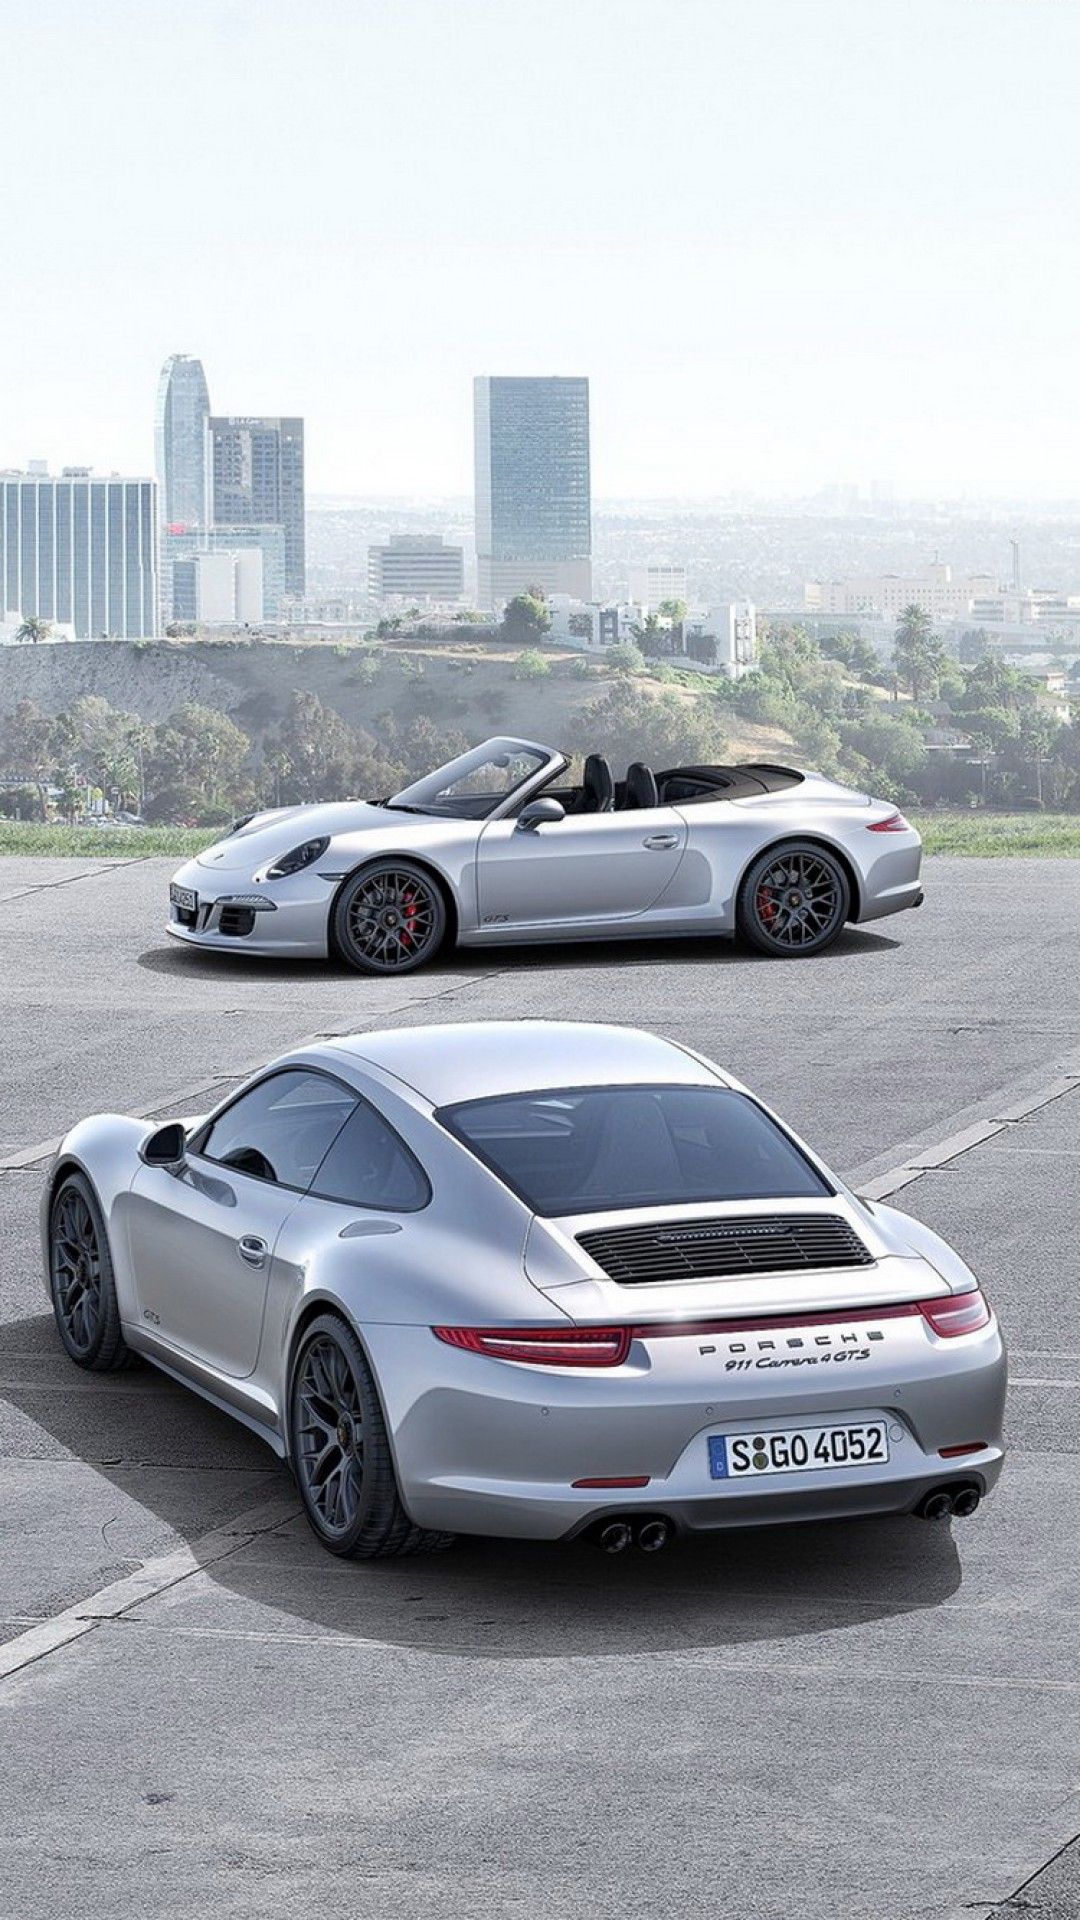 Free download Porsche 911 Carrera GTS iPhone 6 Wallpapers iPhone6SWallpaperhdcom [1080x1920] for your Desktop, Mobile & Tablet